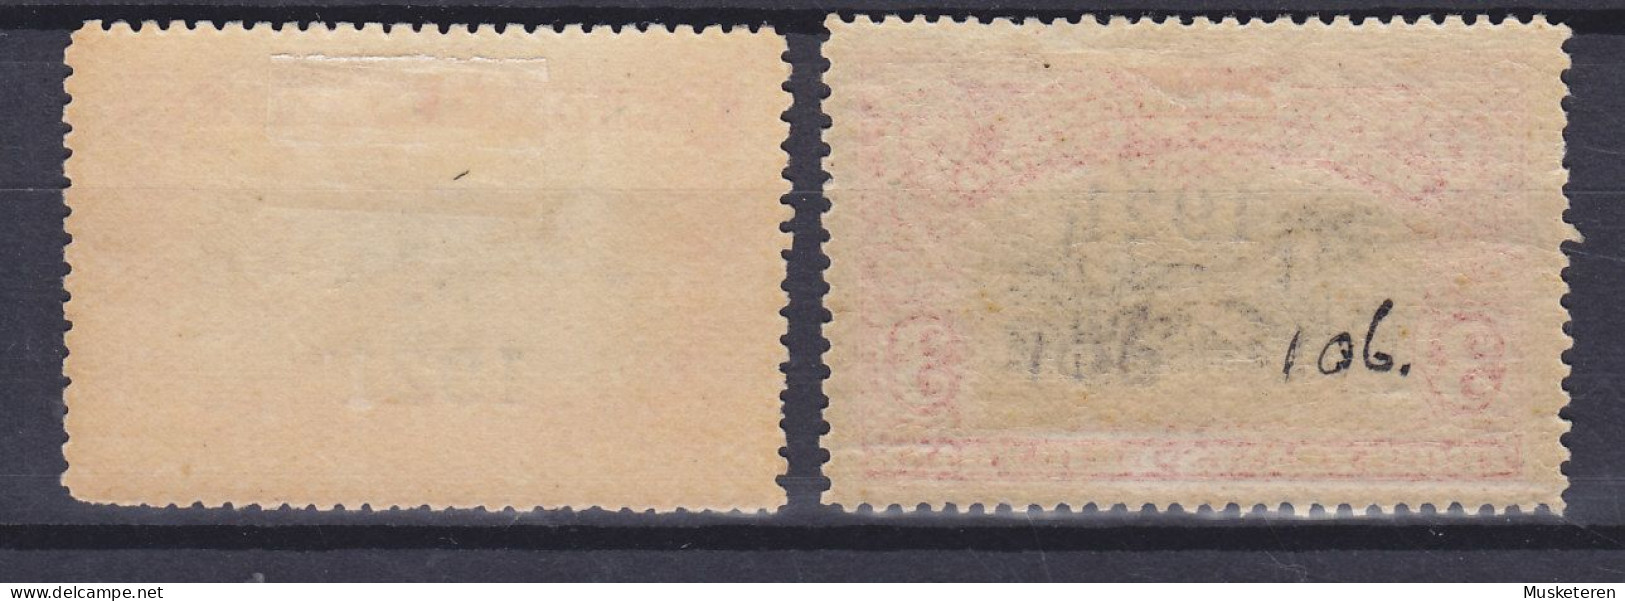 Belgian Congo 1921 Mi. 52-53, Elefantenjagd Elephant Hunt & Dorf Overprinted Surchargé '1921', MH* (2 Scans) - Neufs